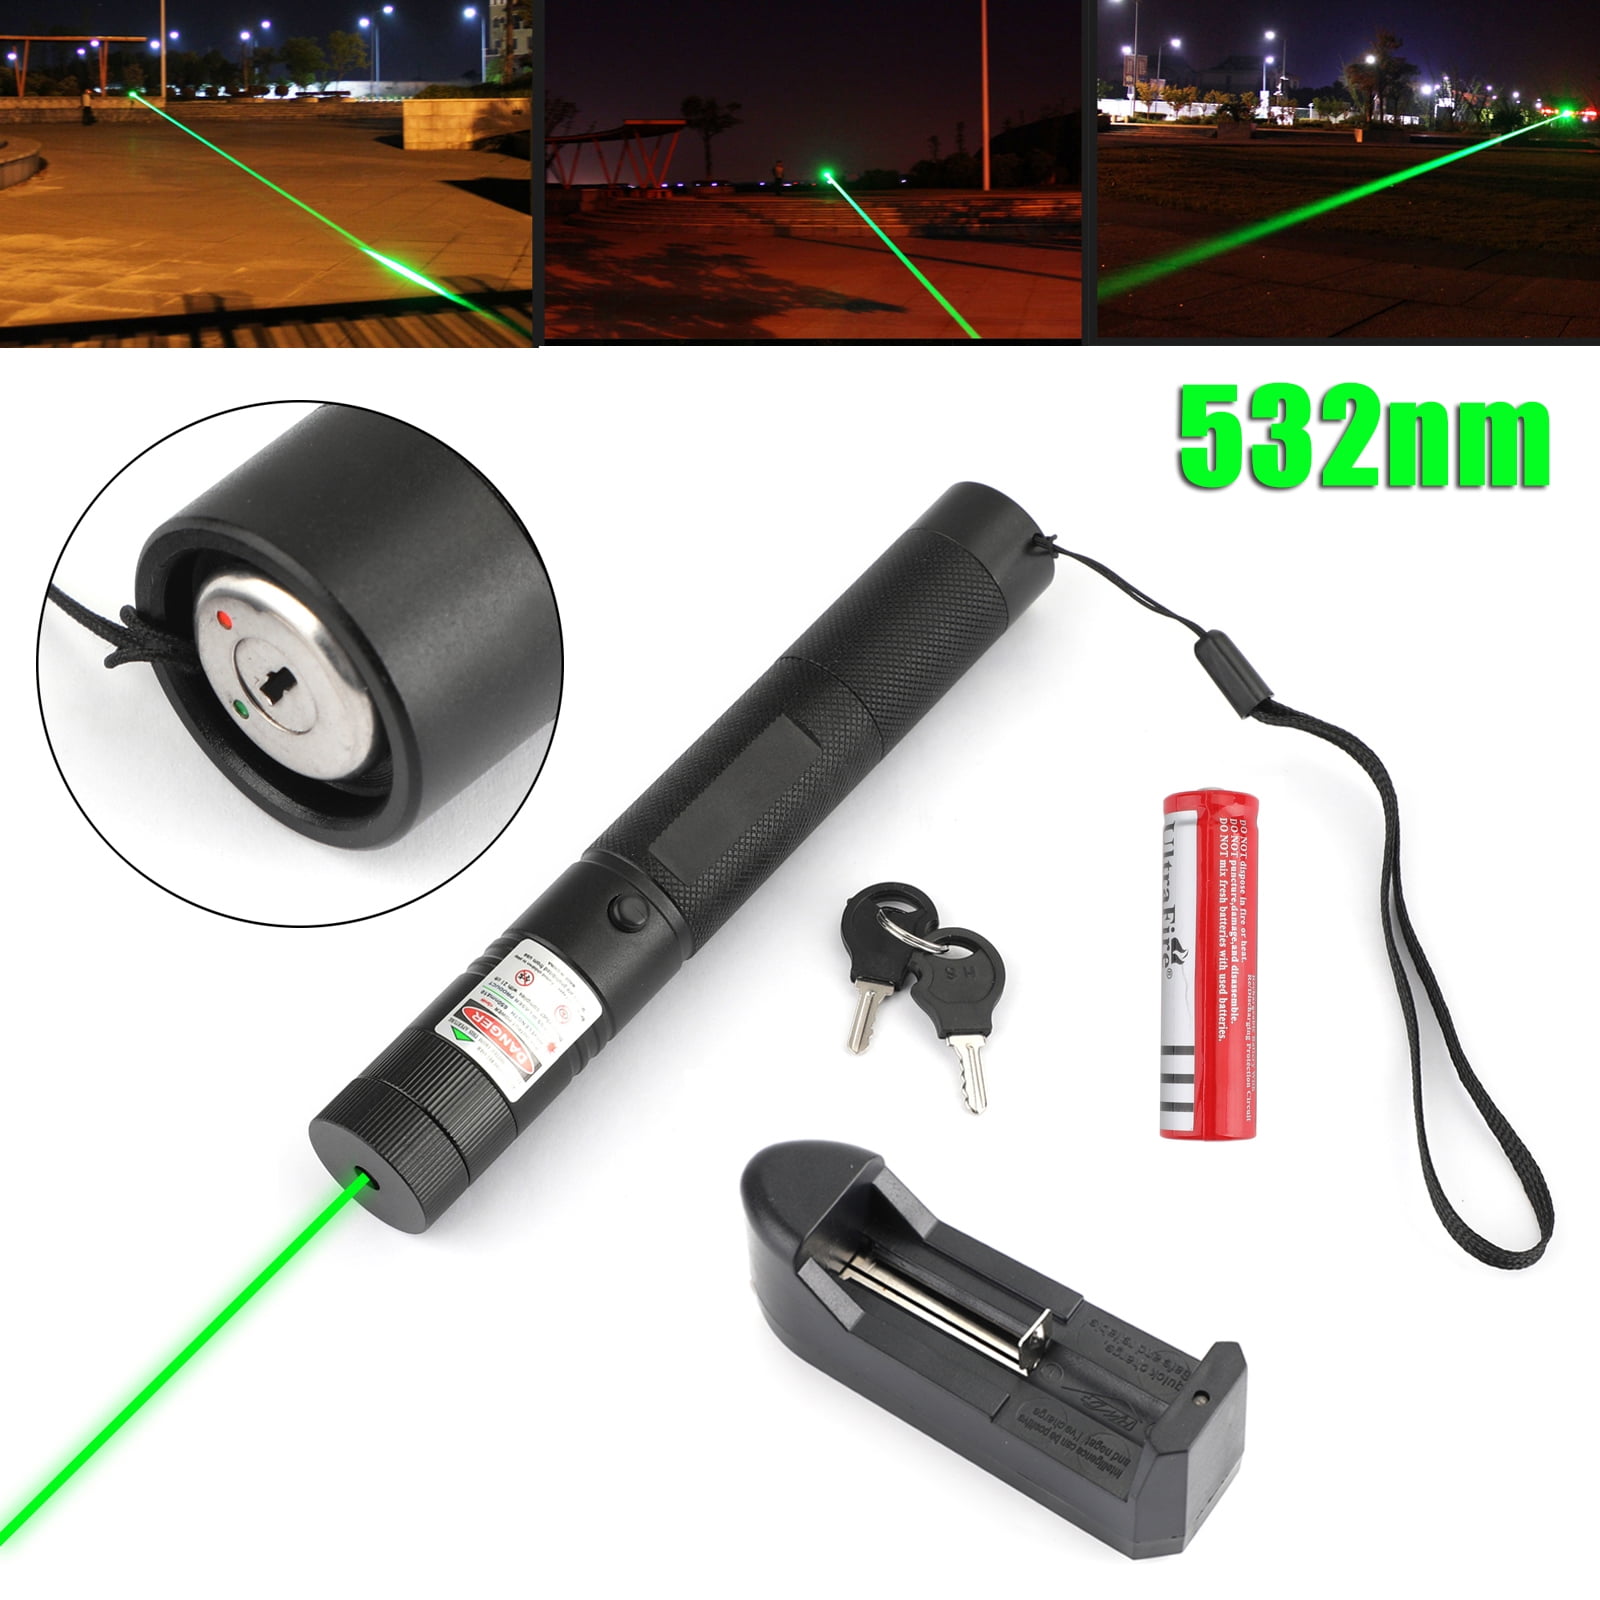 Green Laser Pointer 532nm Lazer Pen High Power Visible Beam Light Tool 303 Focus 